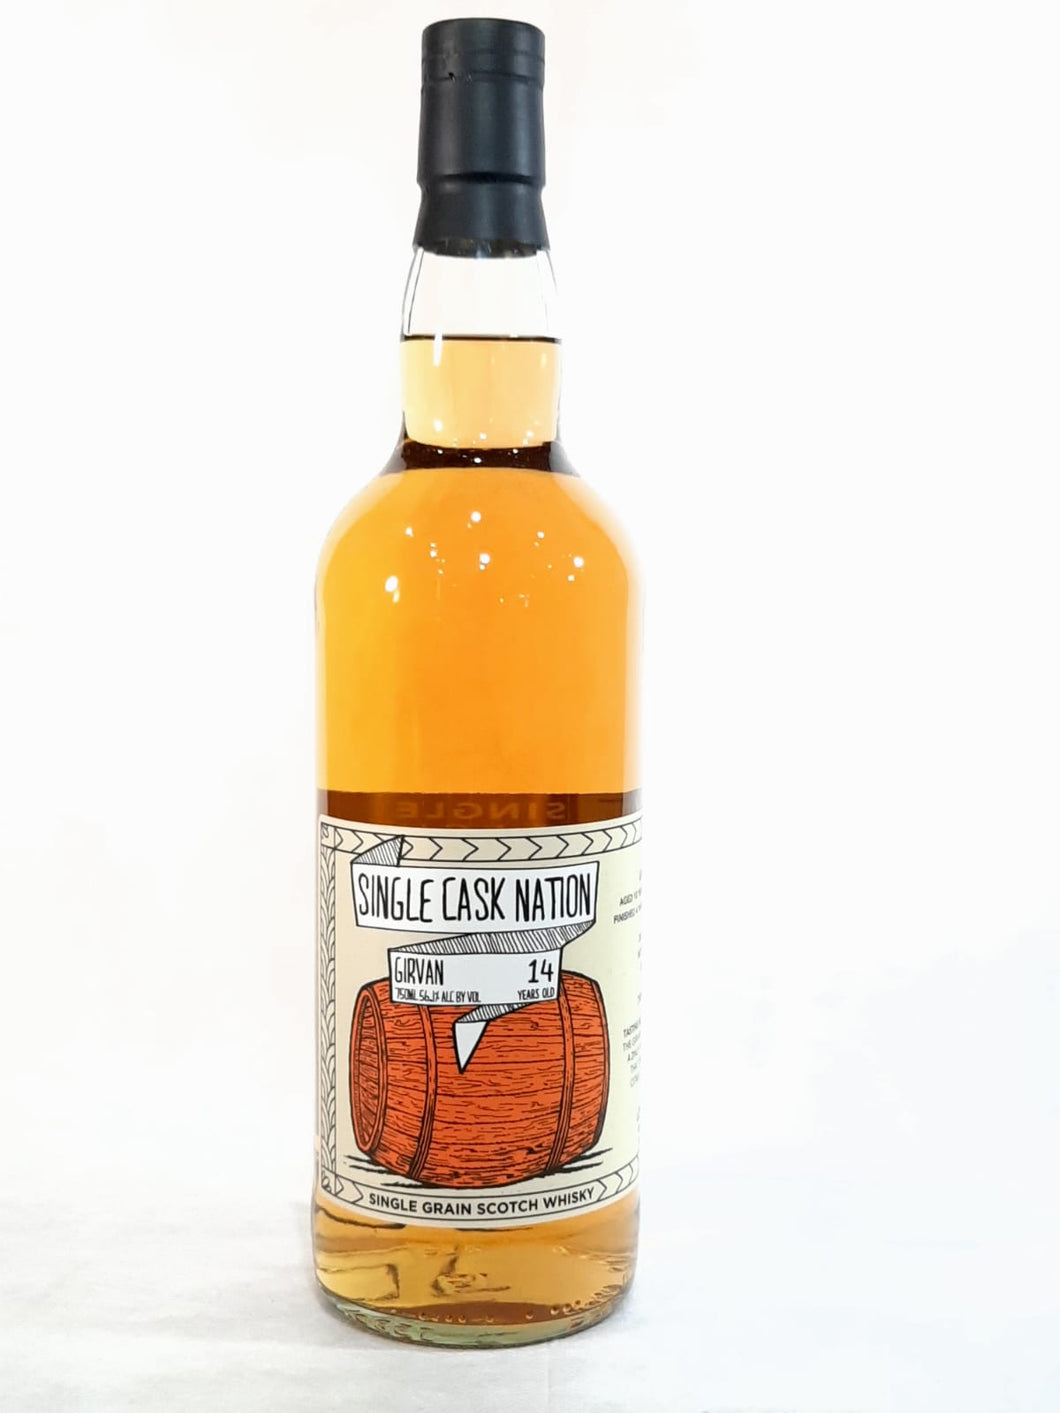 Single Cask Nation Girvan 14 Year Old Single Grain Scotch Whisky 750ml